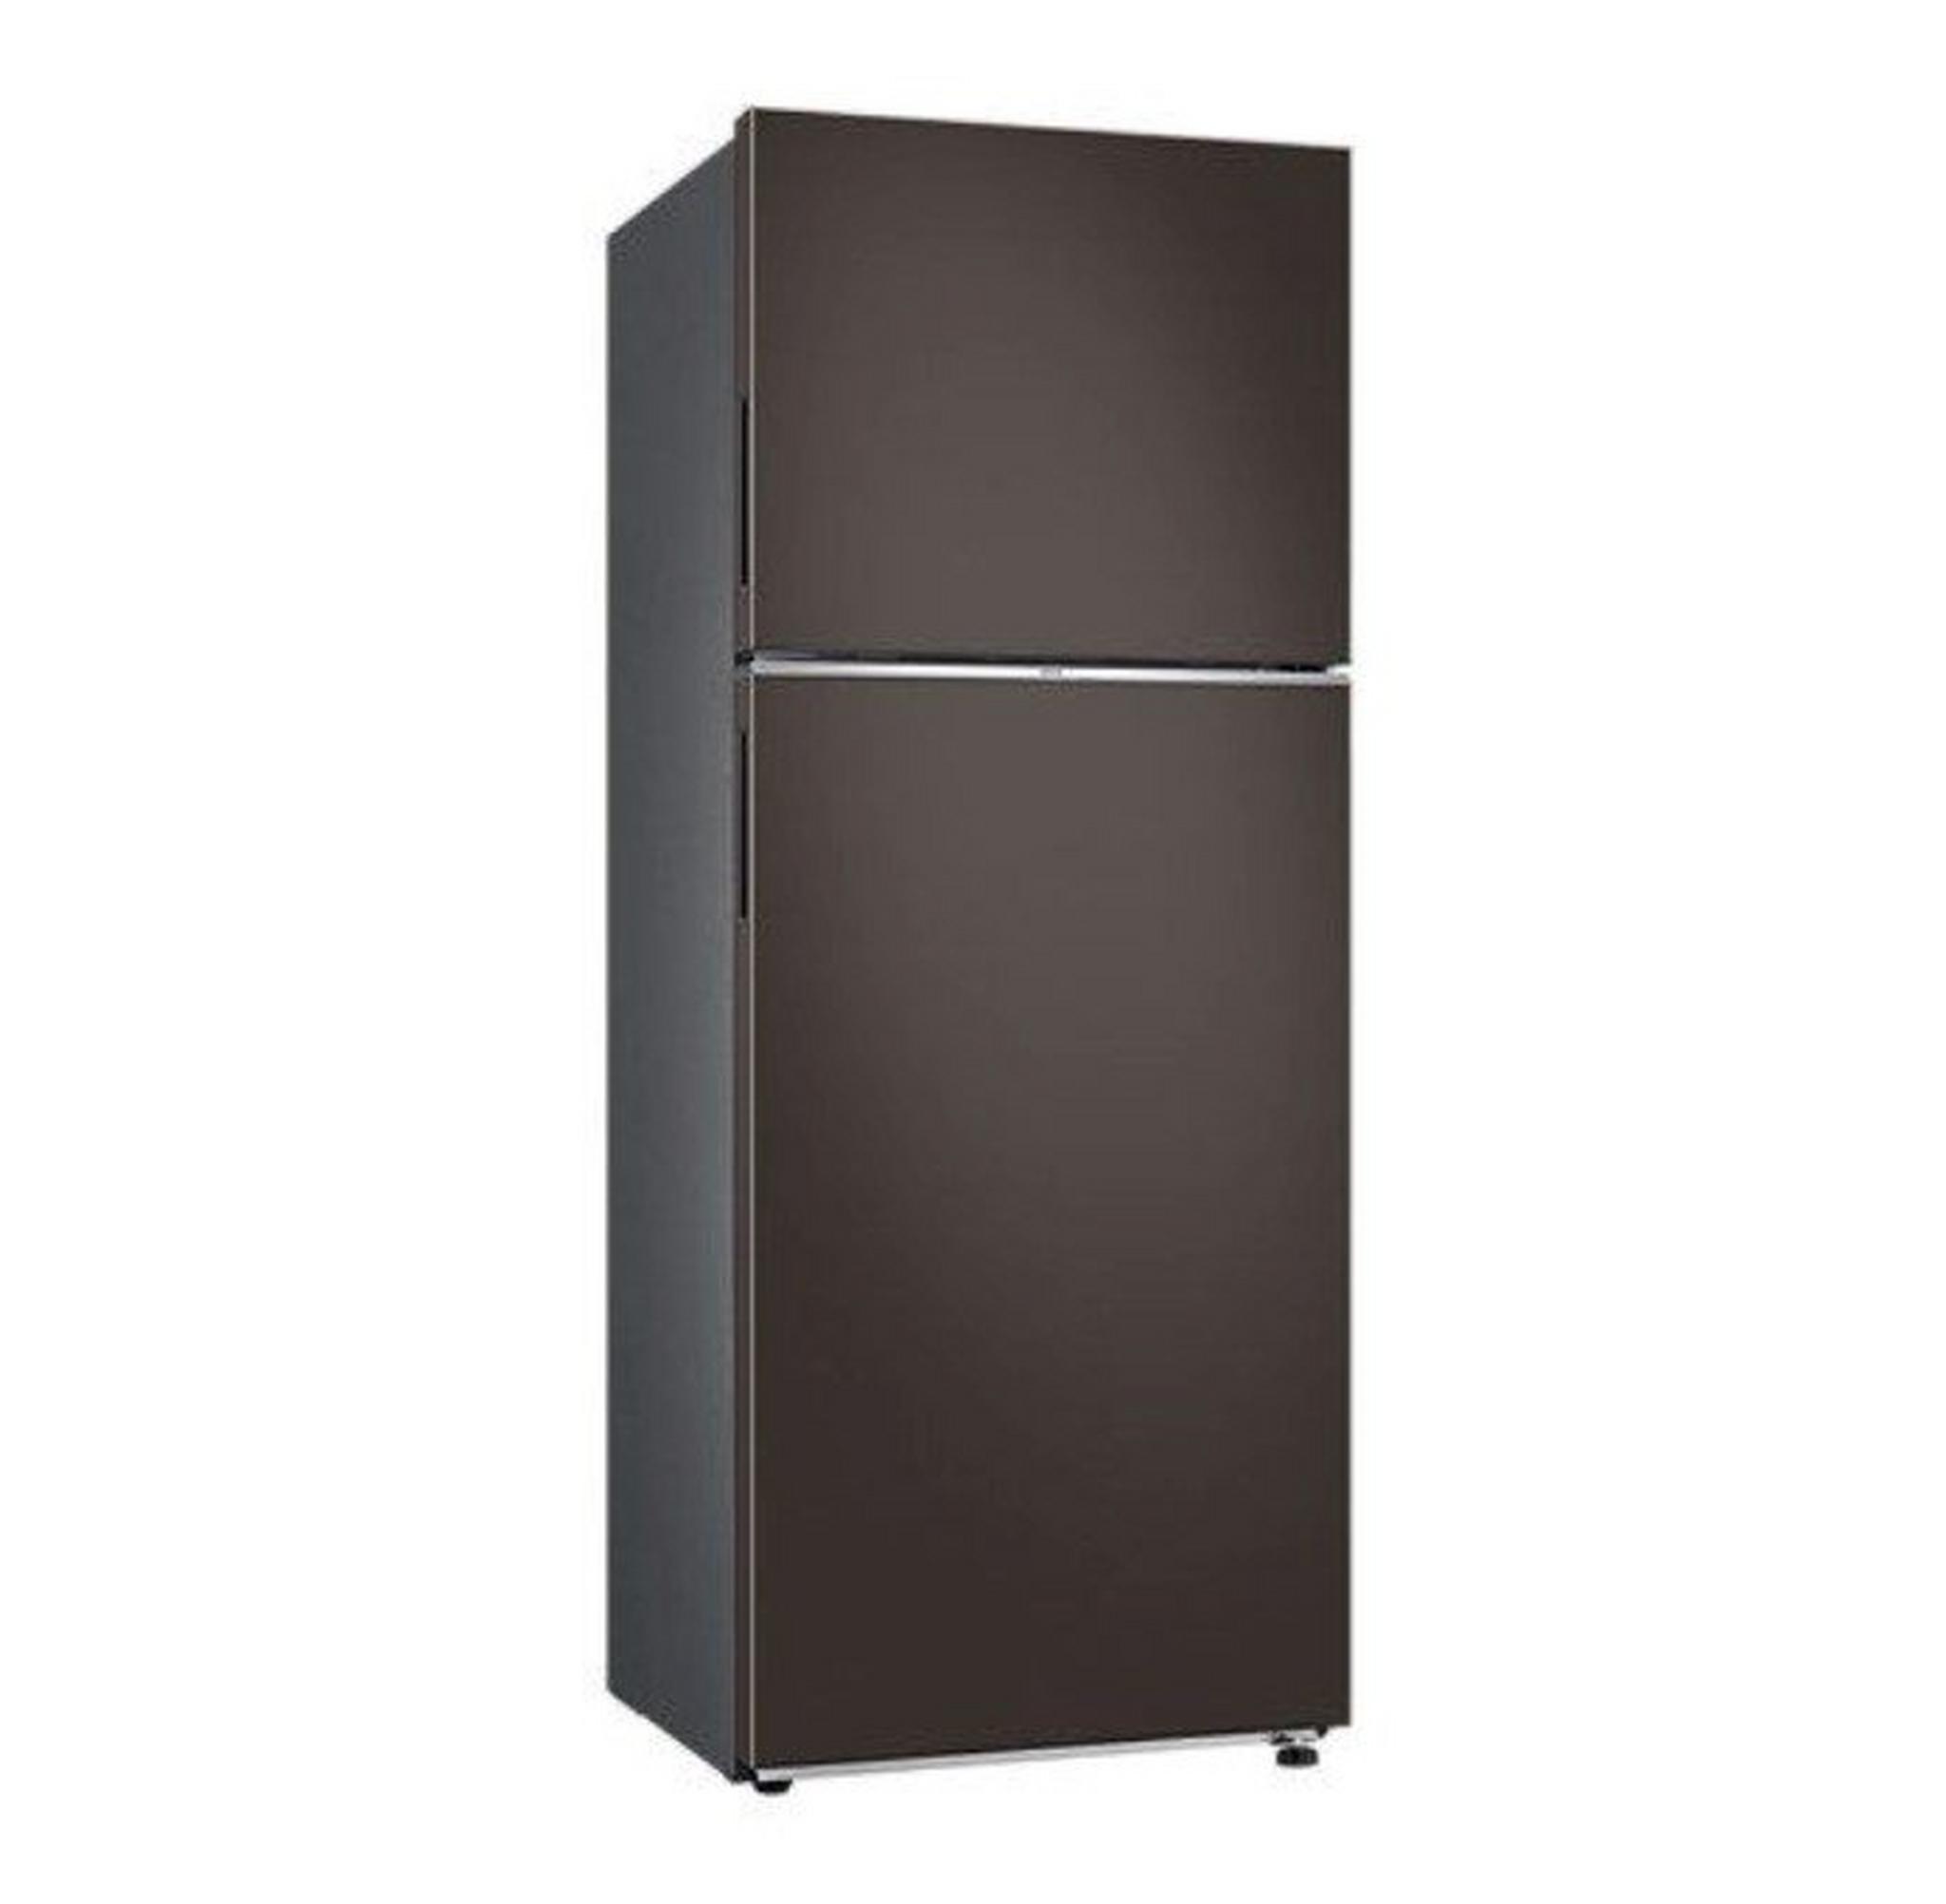 Samsung Refrigerator, 600L , 21 CFT with Bespoke Design - Cotta Charcoal